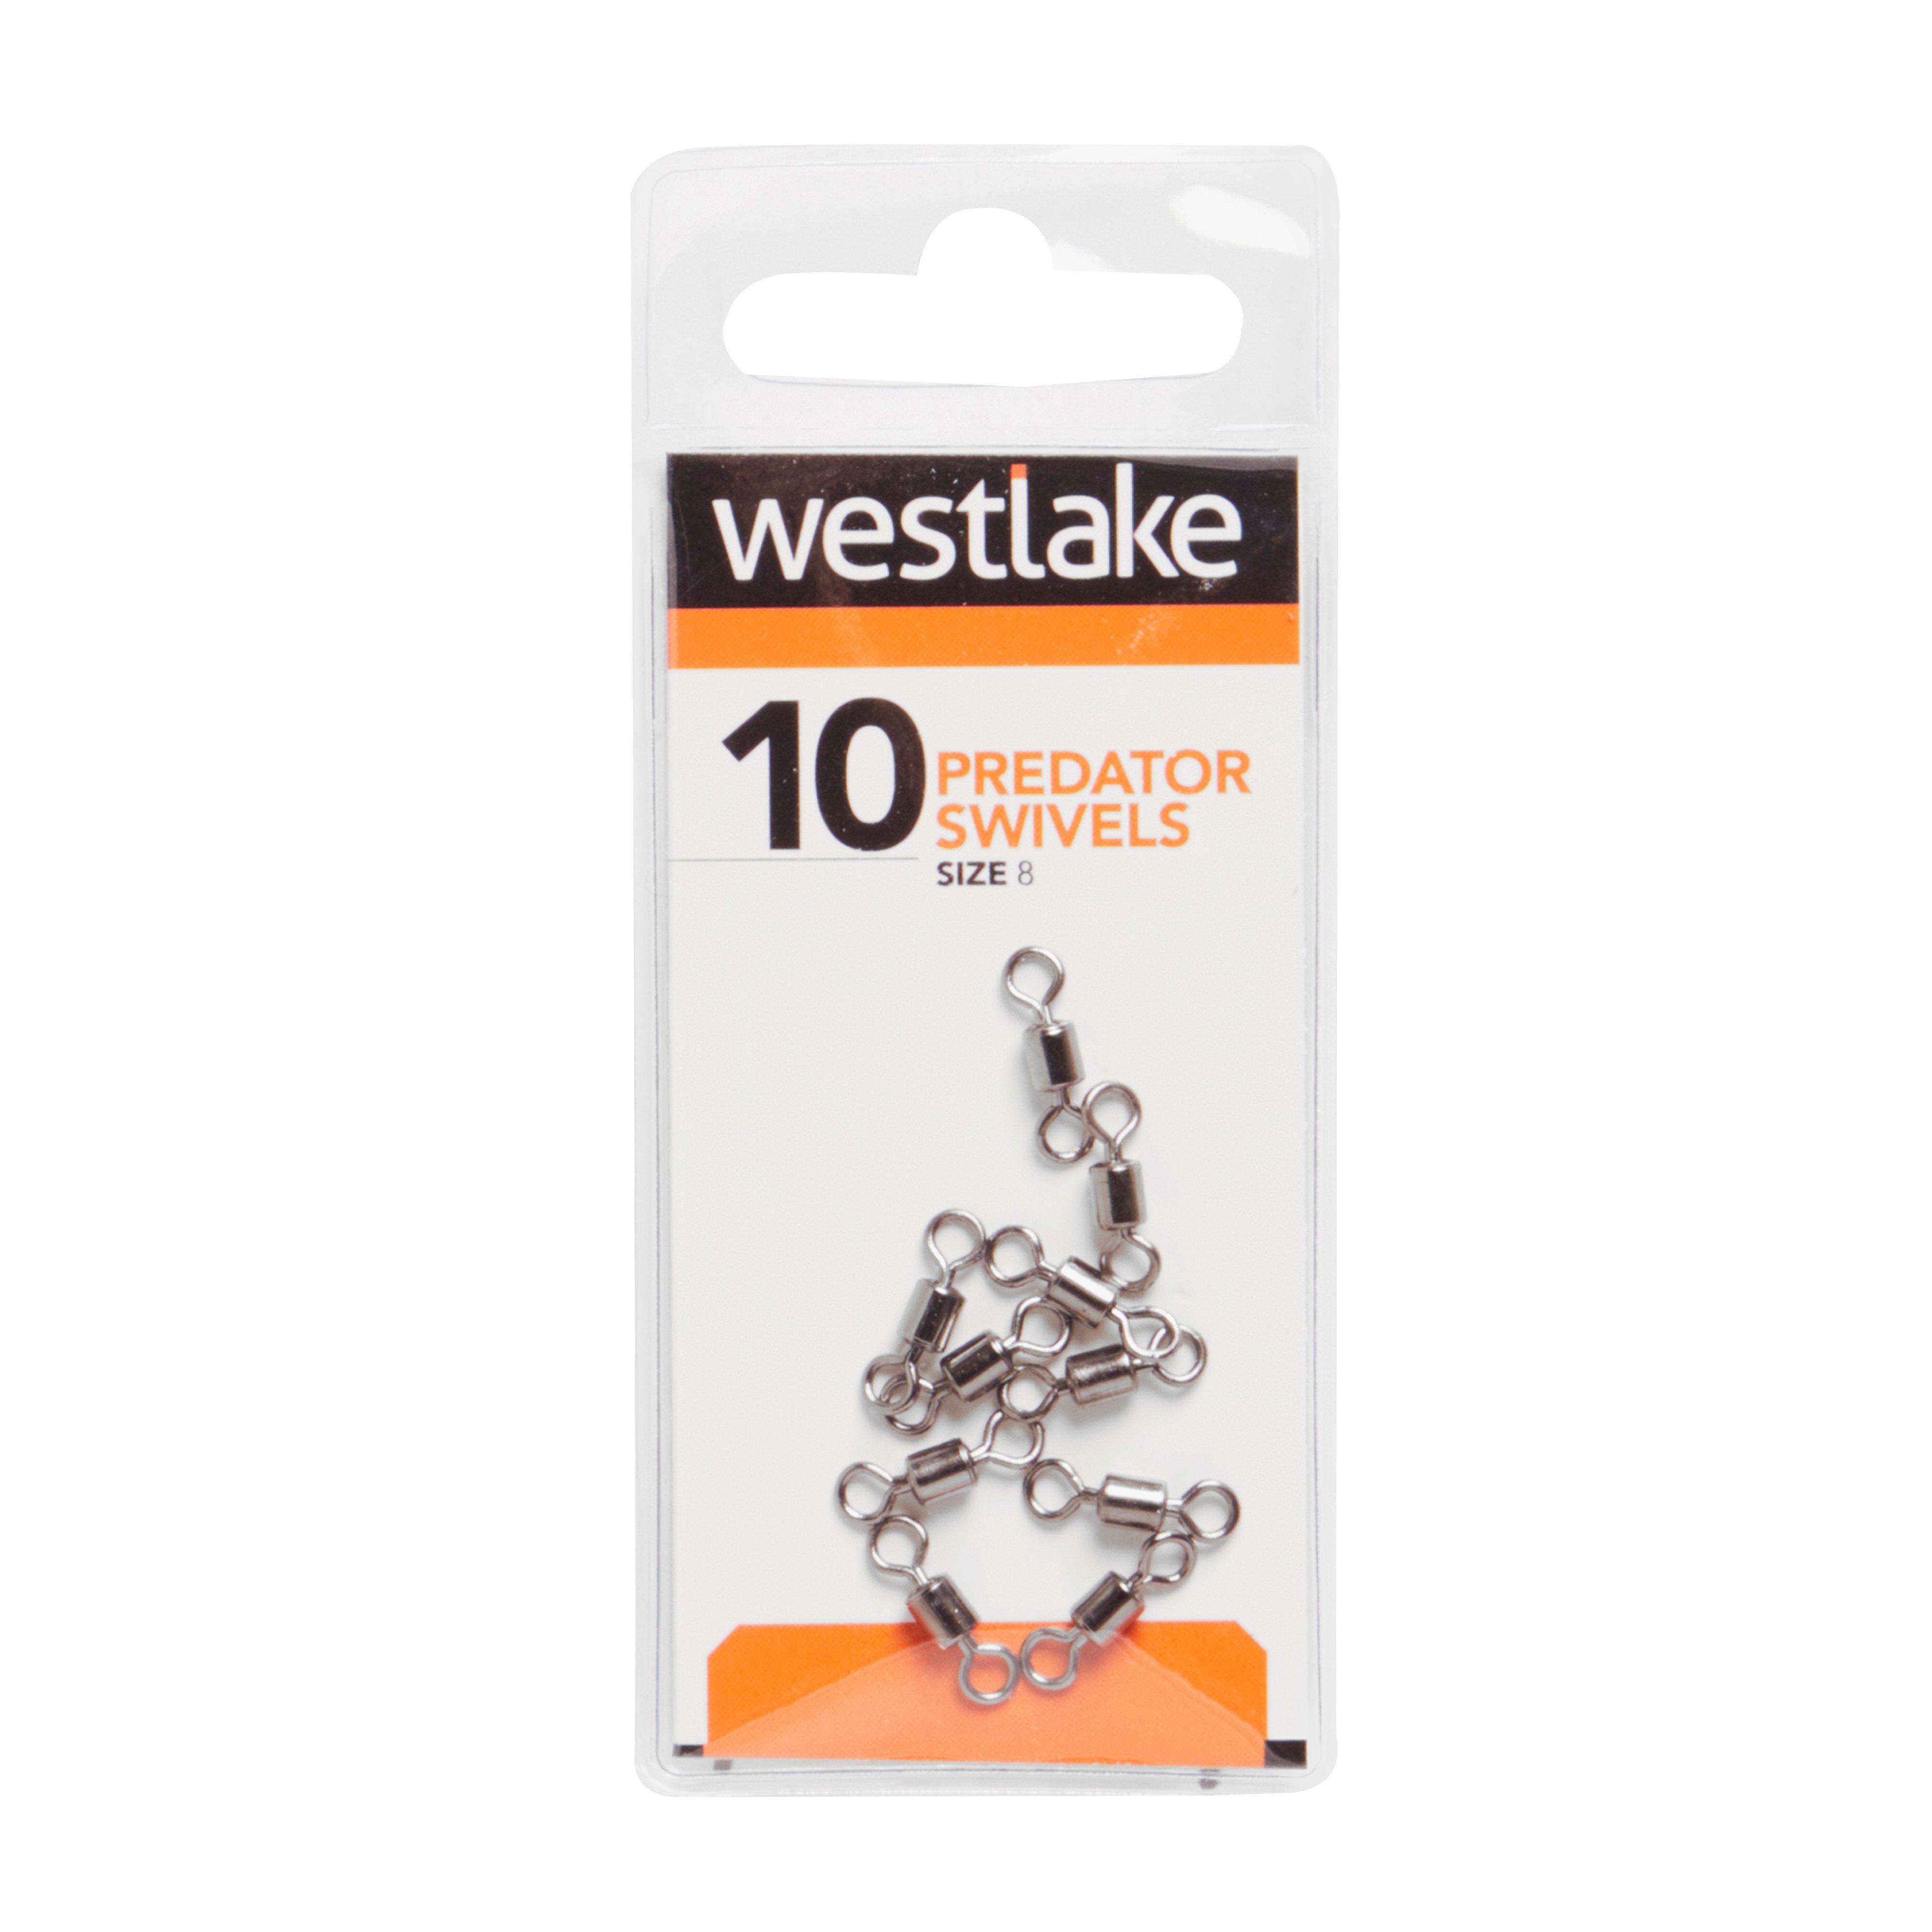 Westlake Pike Swivels Size 8 Review